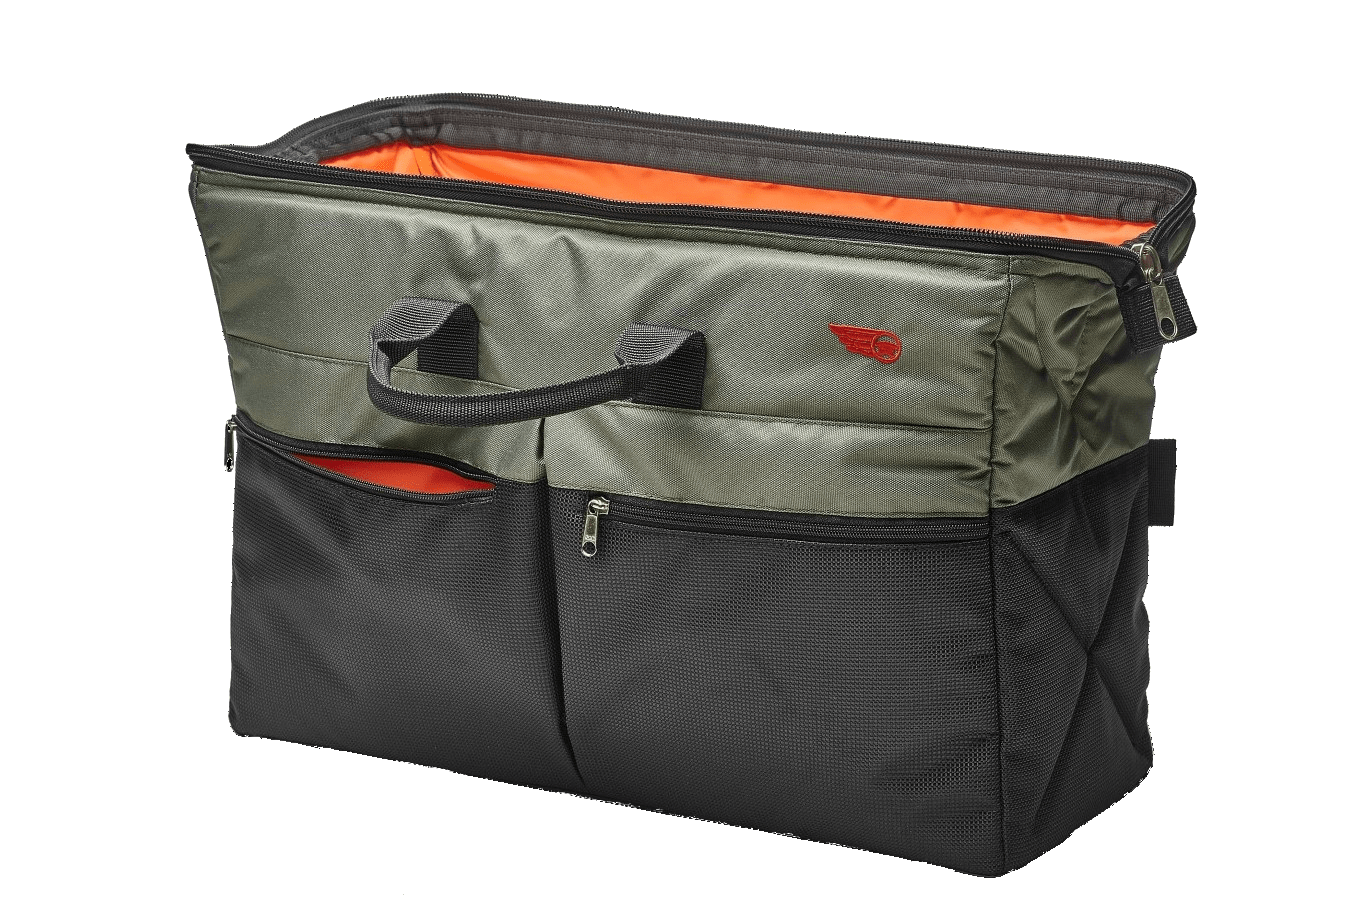 TrendBy Dumpin Trunk Travel Bag in Black-green